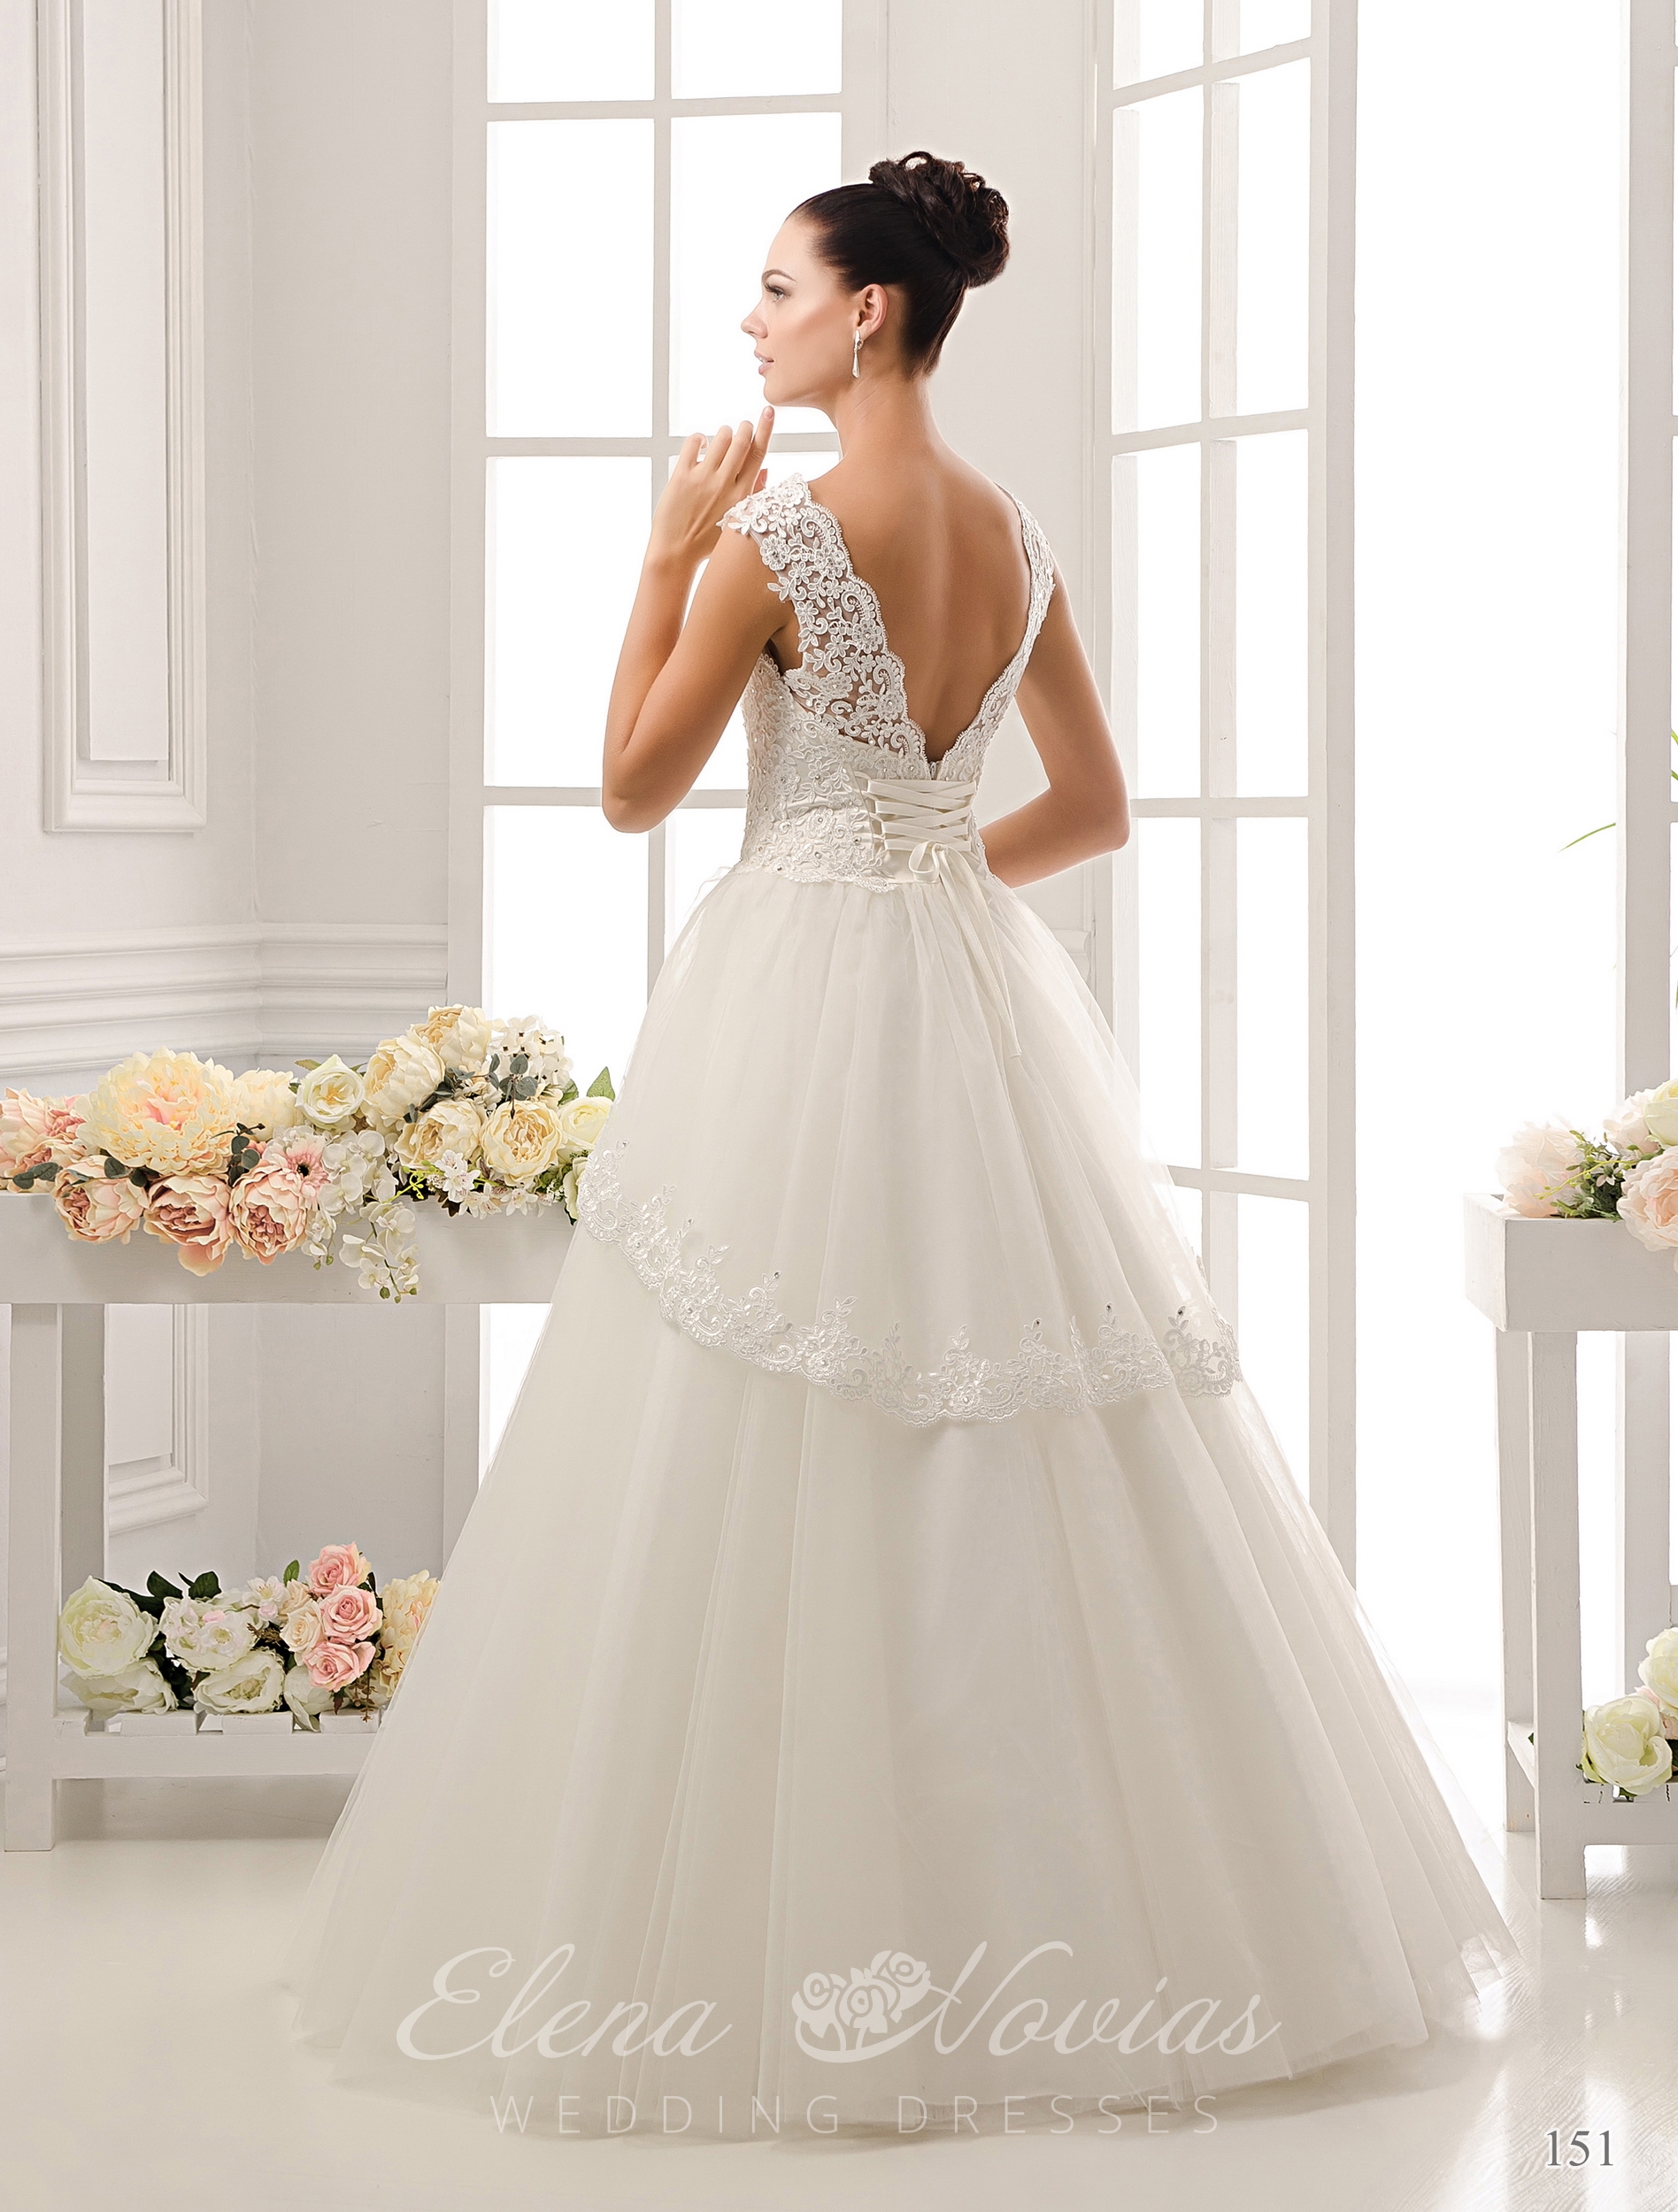 Wedding dresses 151 2